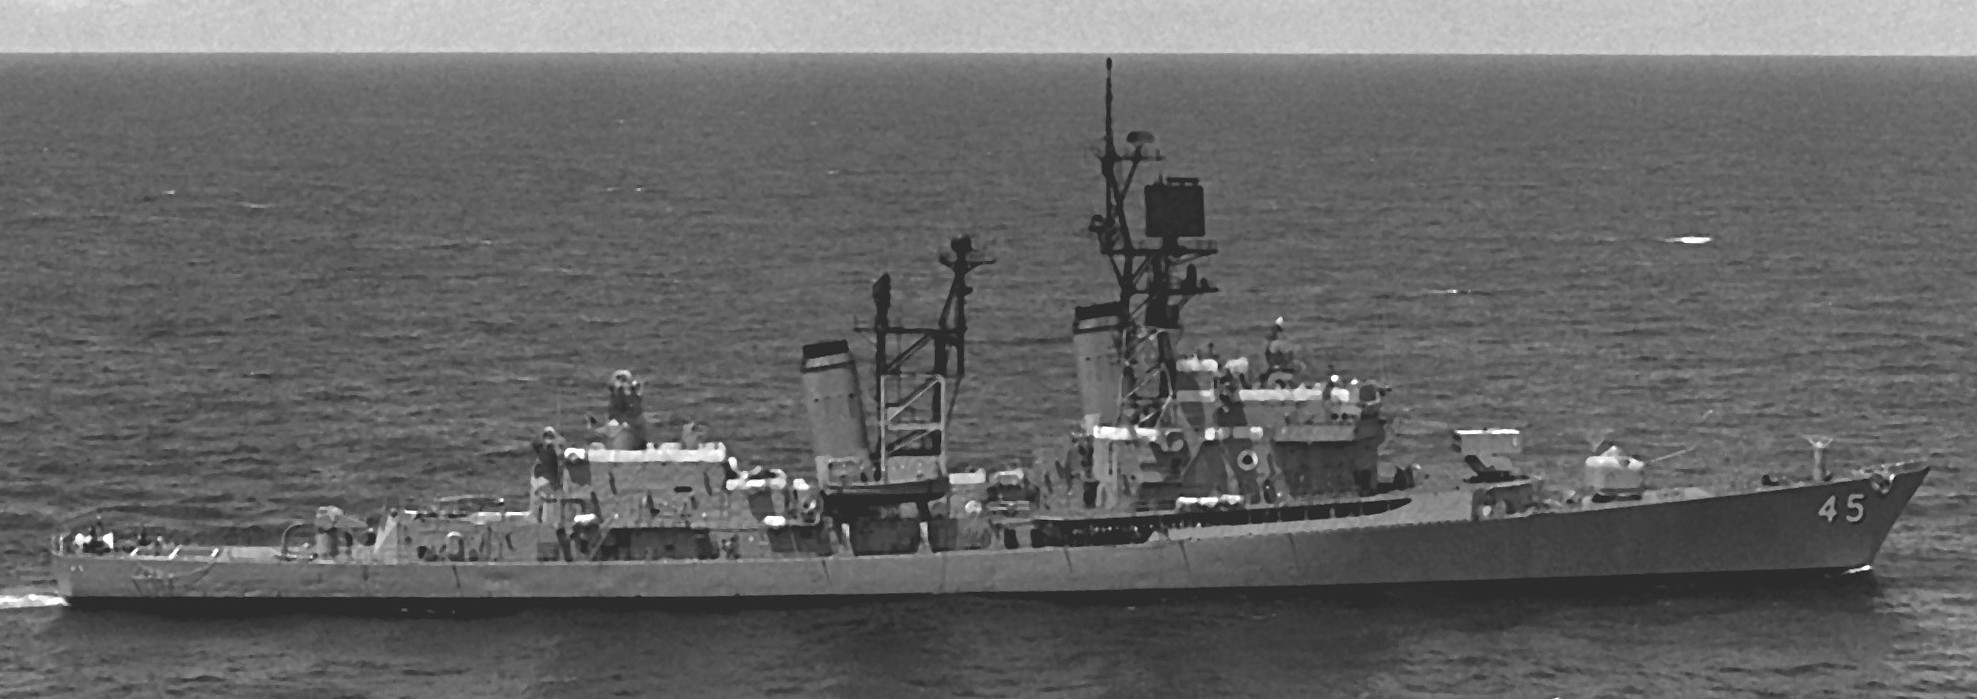 ddg-45 uss dewey farragut class destroyer us navy 1979 07